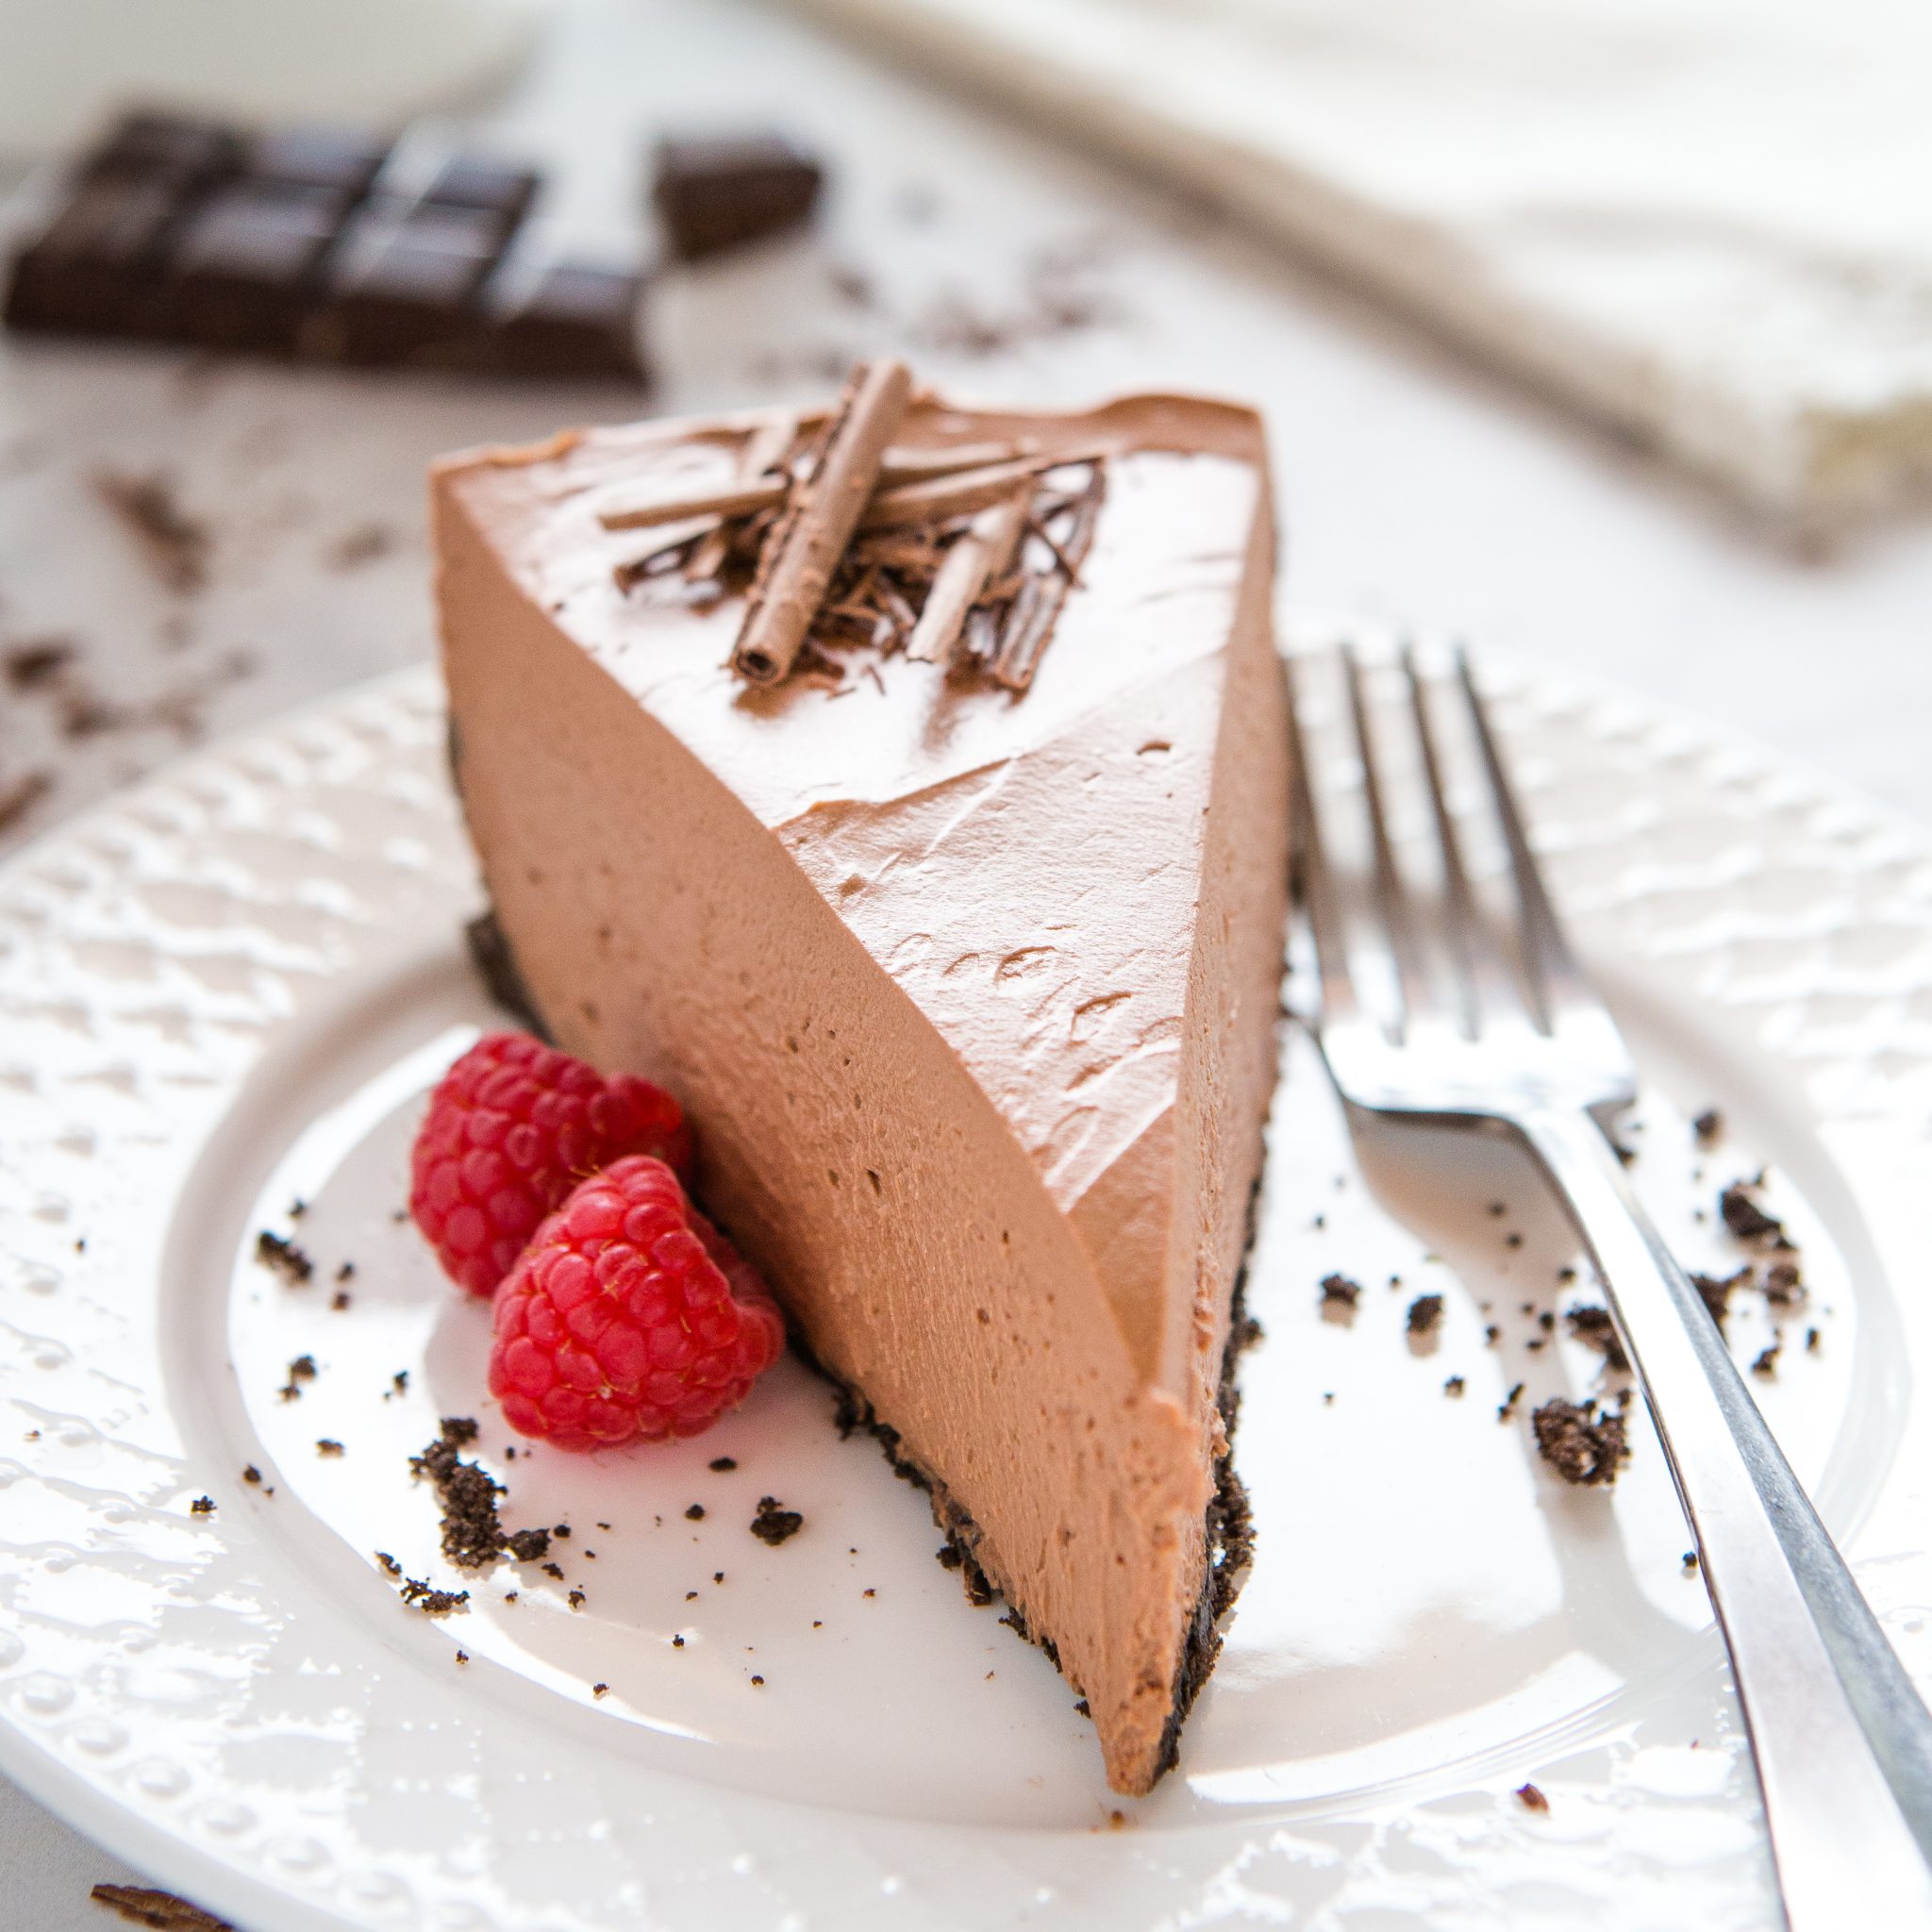 https://thebusybaker.ca/wp-content/uploads/2019/07/easy-no-bake-chocolate-cheesecake-fb-ig-2.jpg